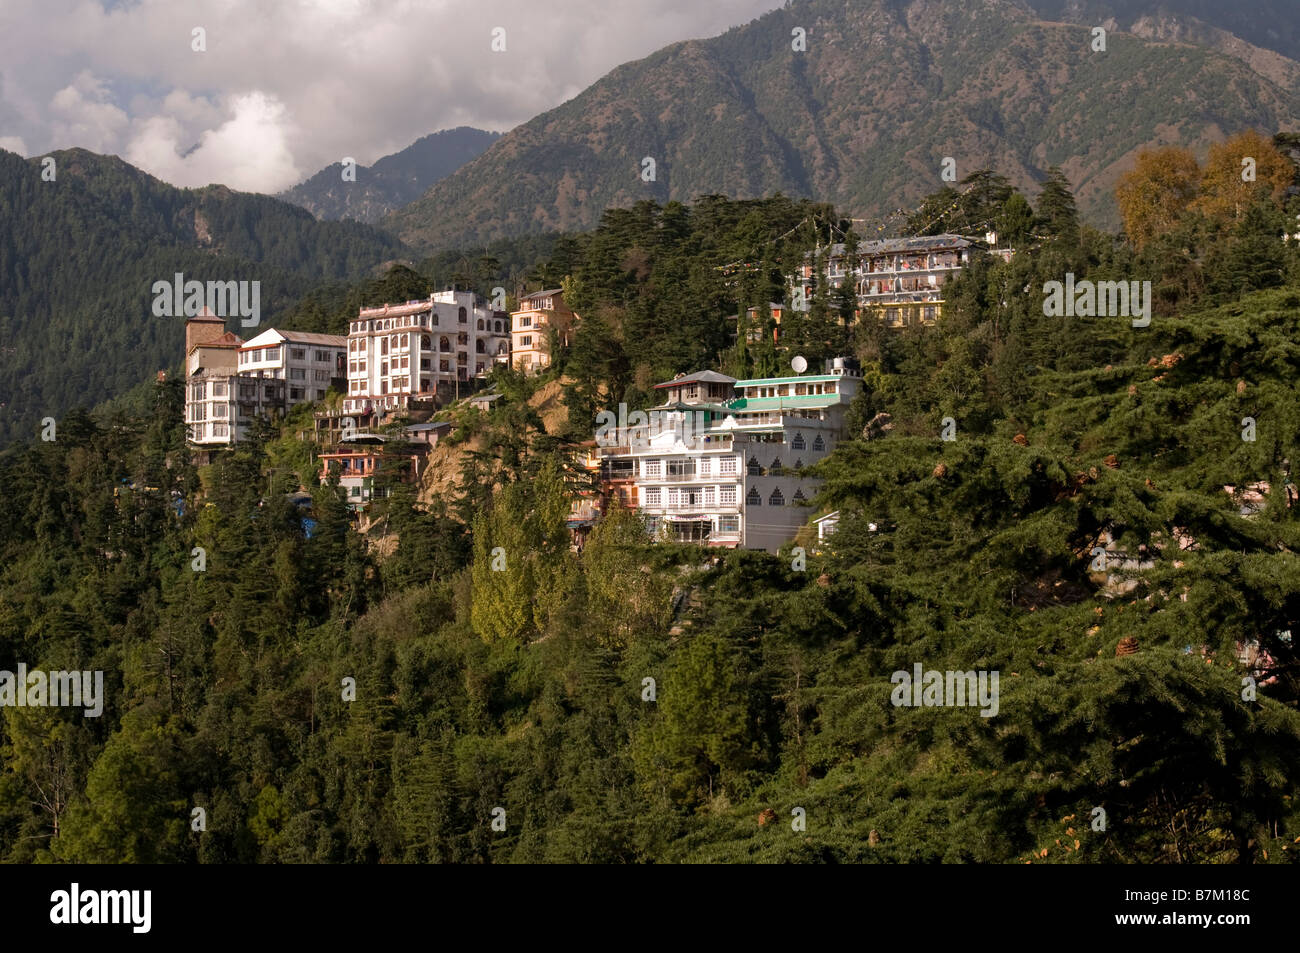 MacLeodganj au pied de l'Himalaya. Dharamsala. L'Himachal Pradesh. L'Inde. Banque D'Images